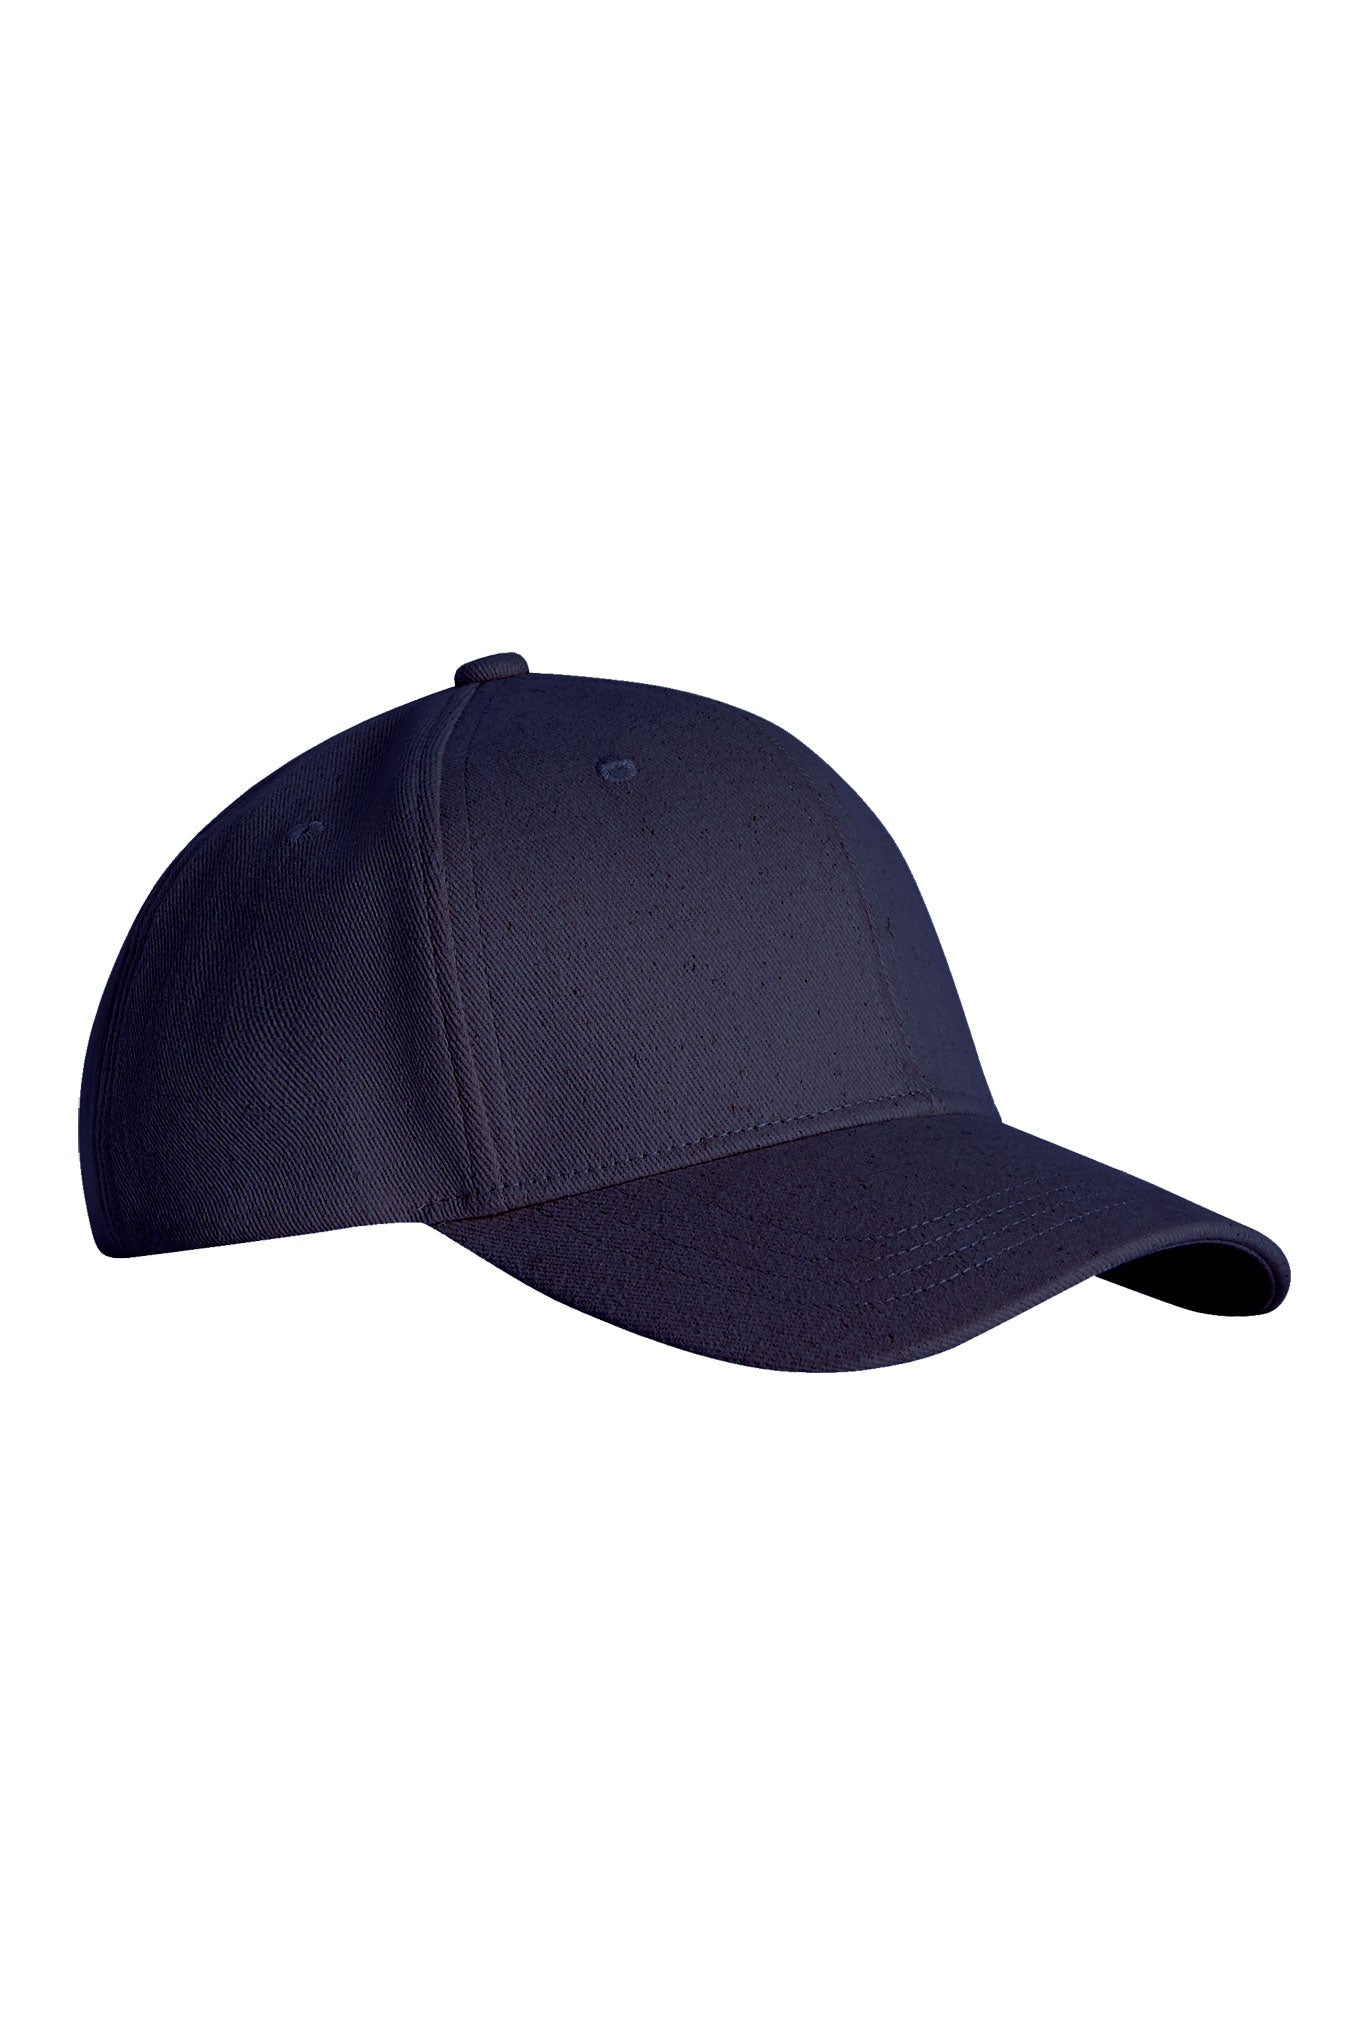 Hat - ROCKY Organic Cotton Cap Navy